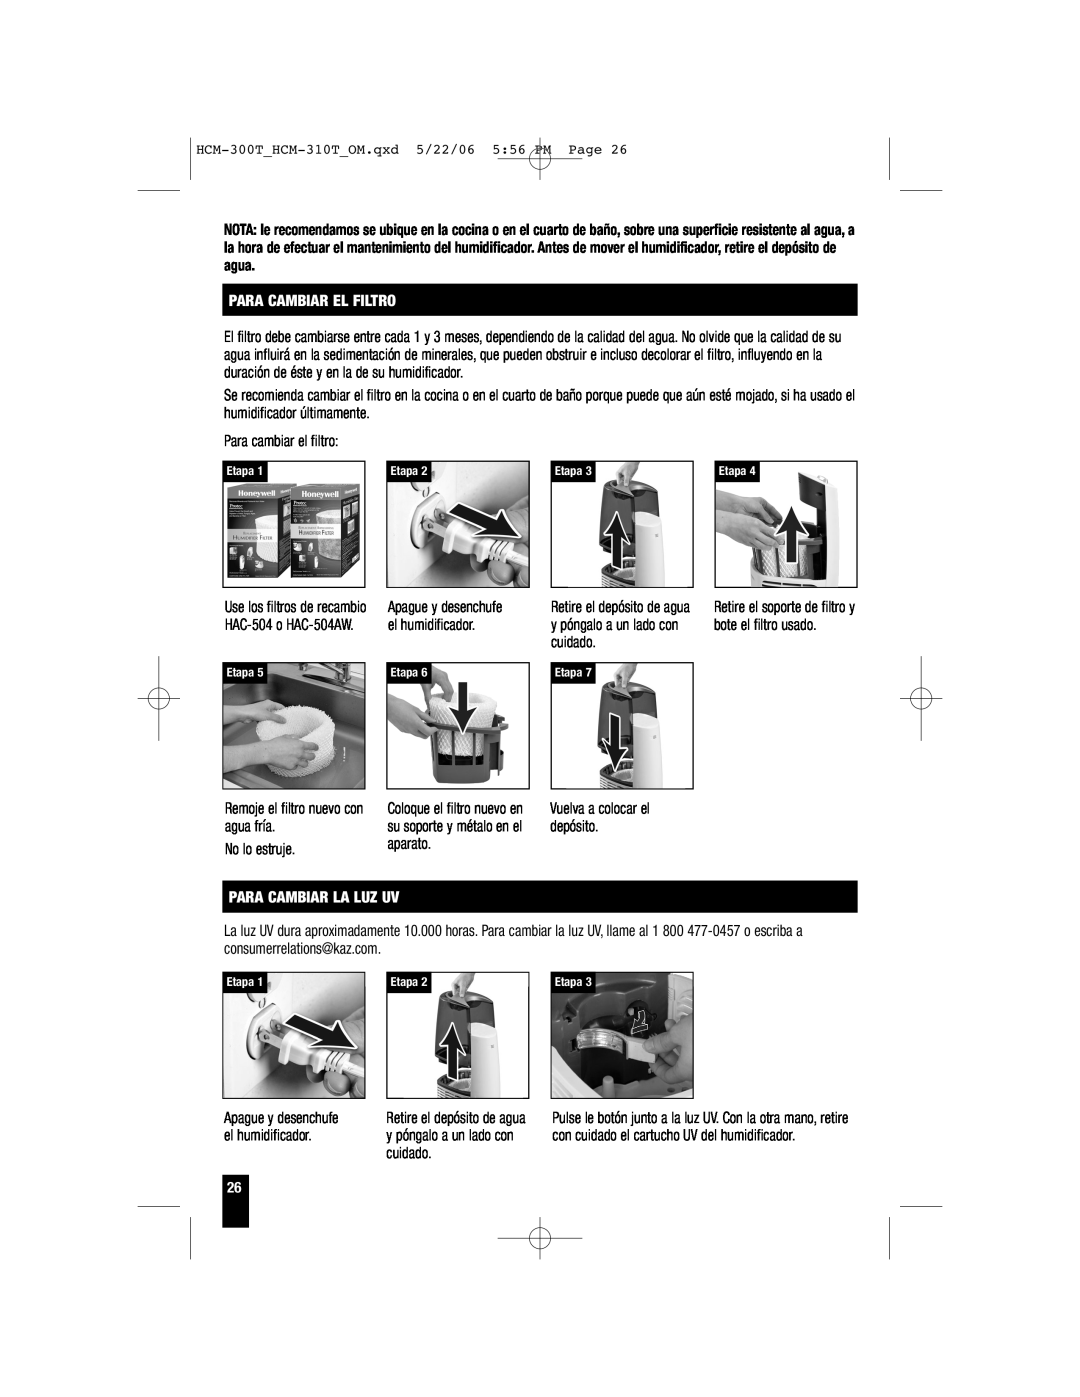 Honeywell HCM-300T, HCM-315T, HCM-310T important safety instructions Para Cambiar El Filtro, Para Cambiar La Luz Uv 